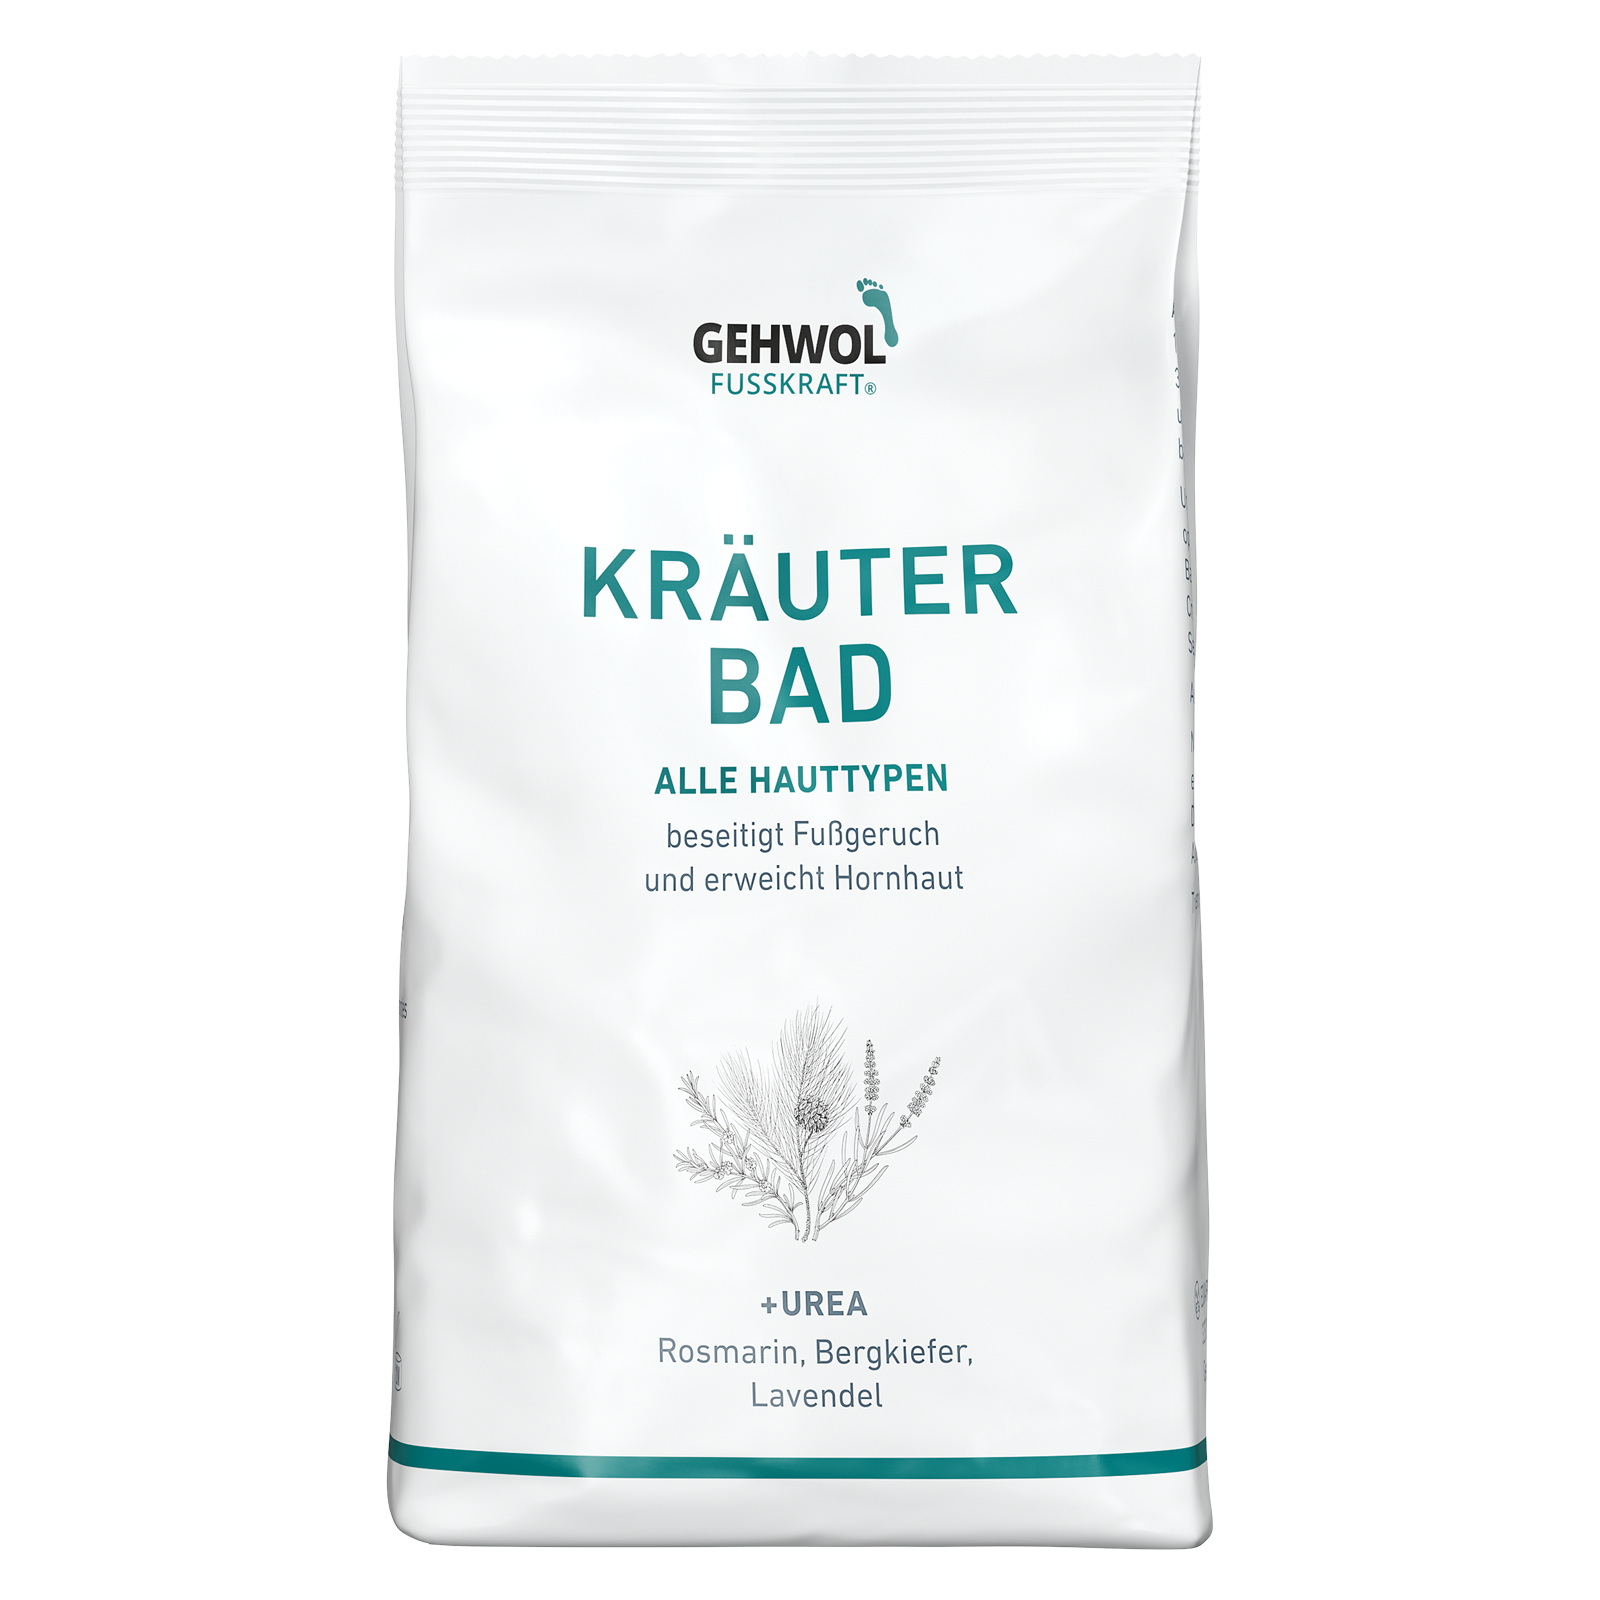 GEHWOL FUSSKRAFT® Kräuter Bad (Farbe Grün), 250 g Inhalt